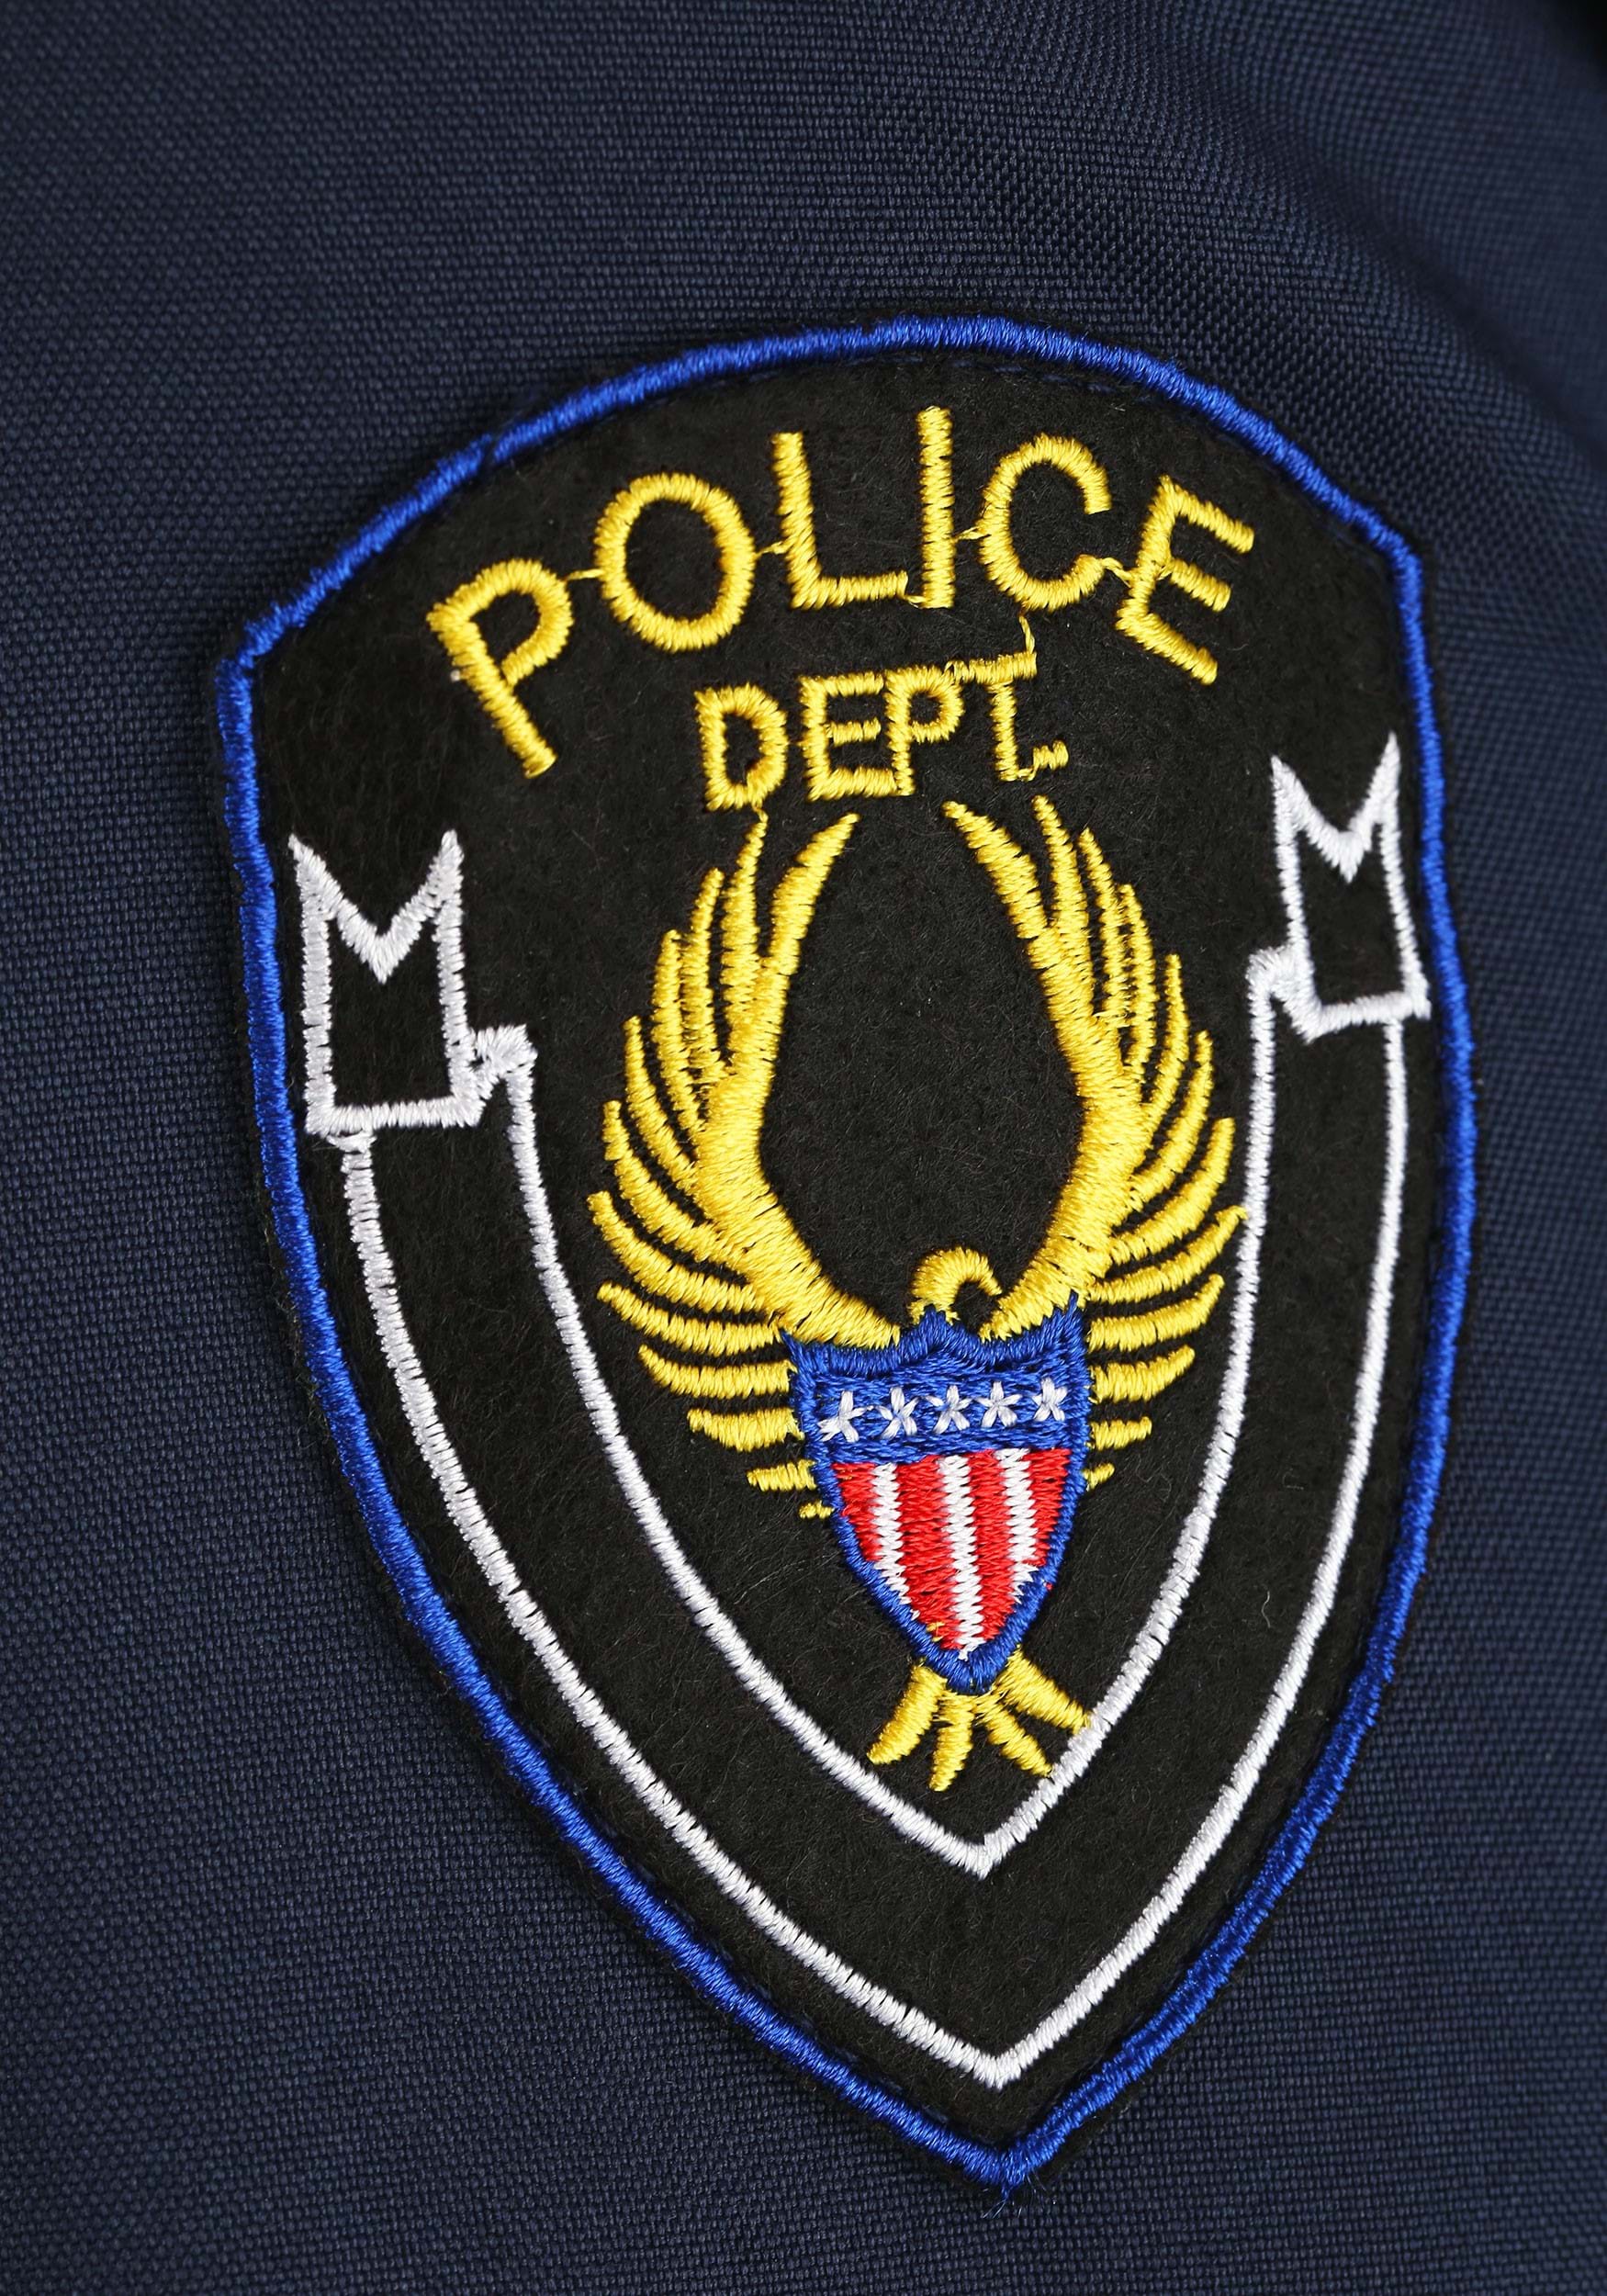 Men's Adult Long Sleeve Police Shirt